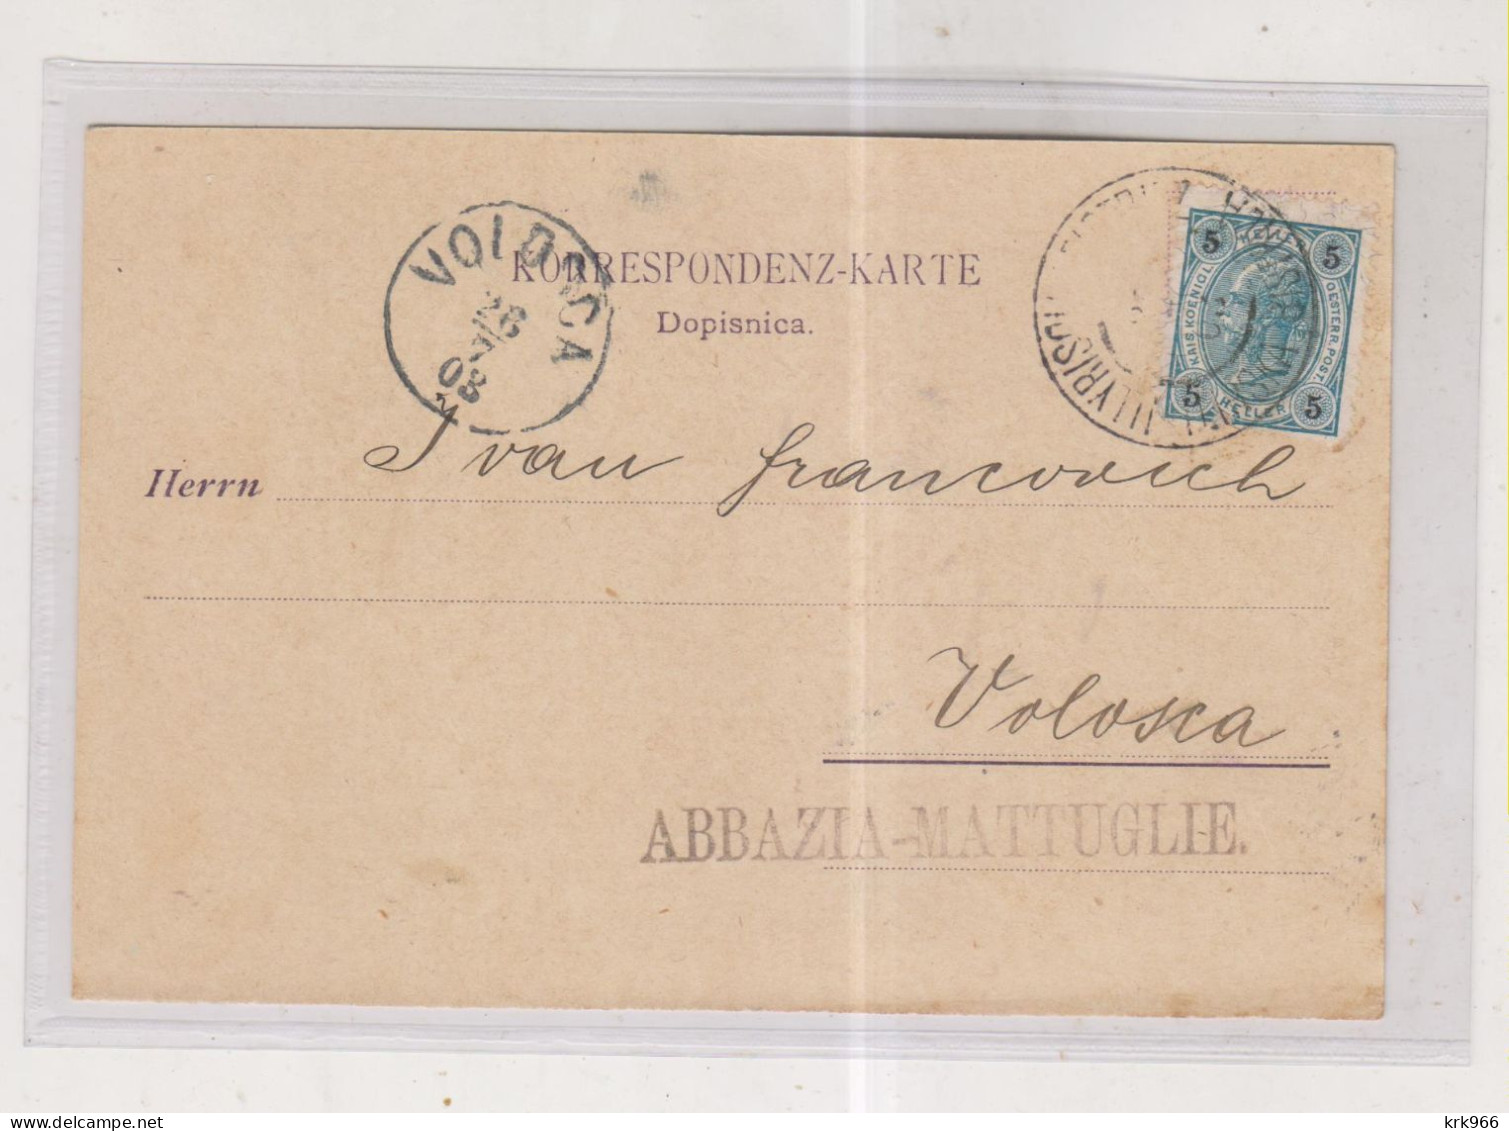 SLOVENIA AUSTRIA 1903 ILIRSKA BISTRICA Nice Postcard To Volosca Volosko Croatia - Slowenien